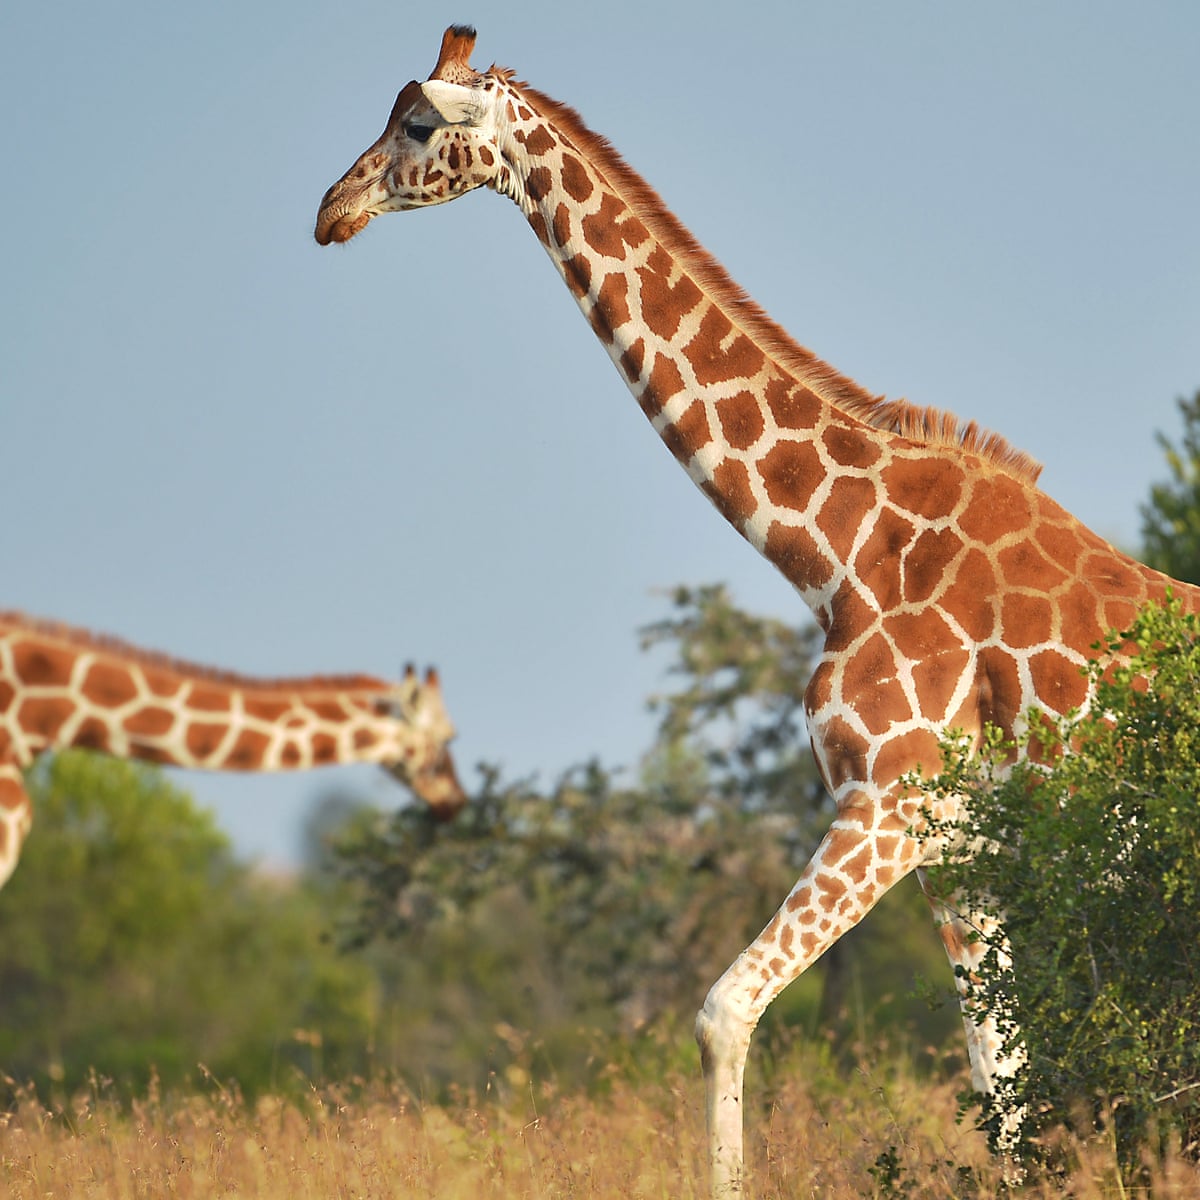 Giraffes facing extinction after devastating decline, experts warn ...